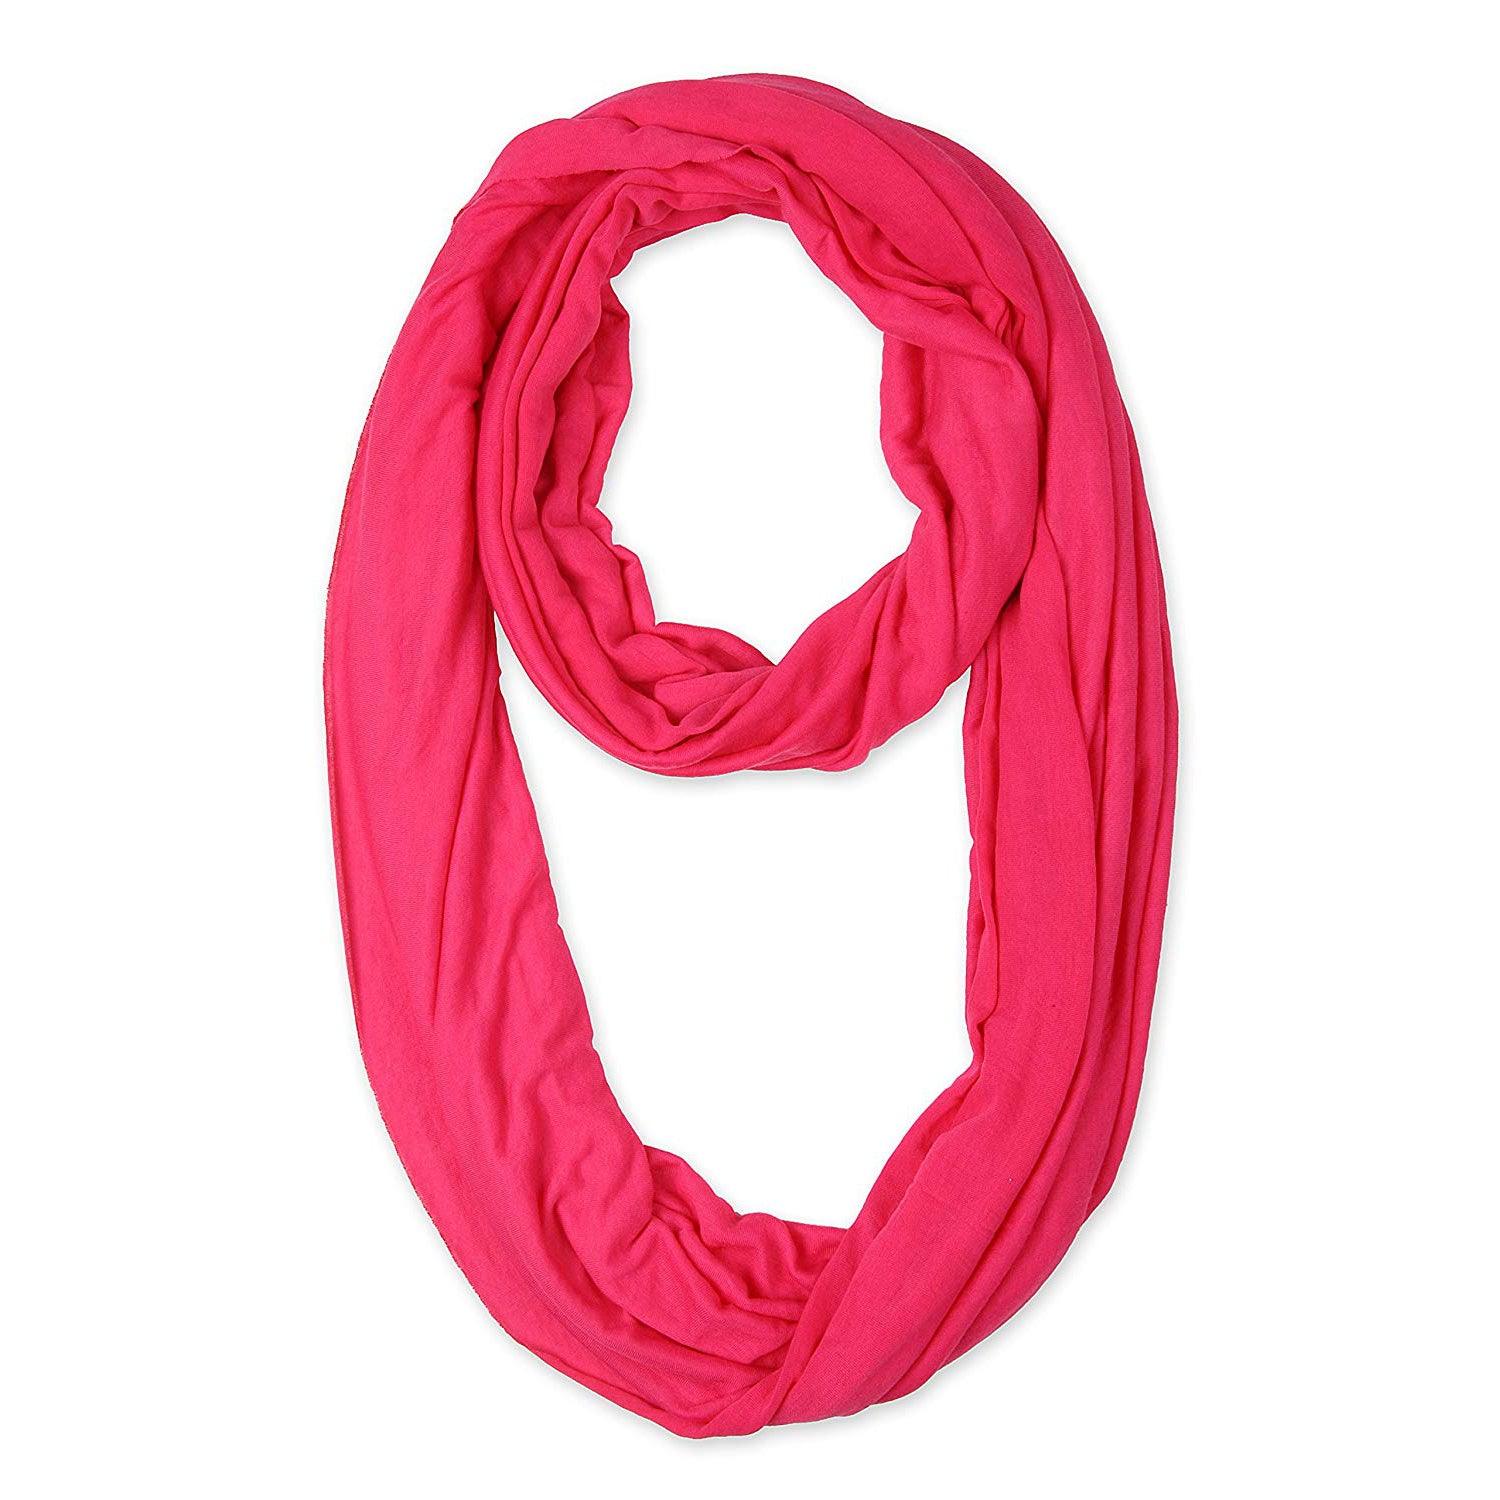 Zindwear Women's Cotton Hosiery Infinity Around Loop Convertible Scarves/Wraps (One Size, Peach Pink) - Walgrow.com